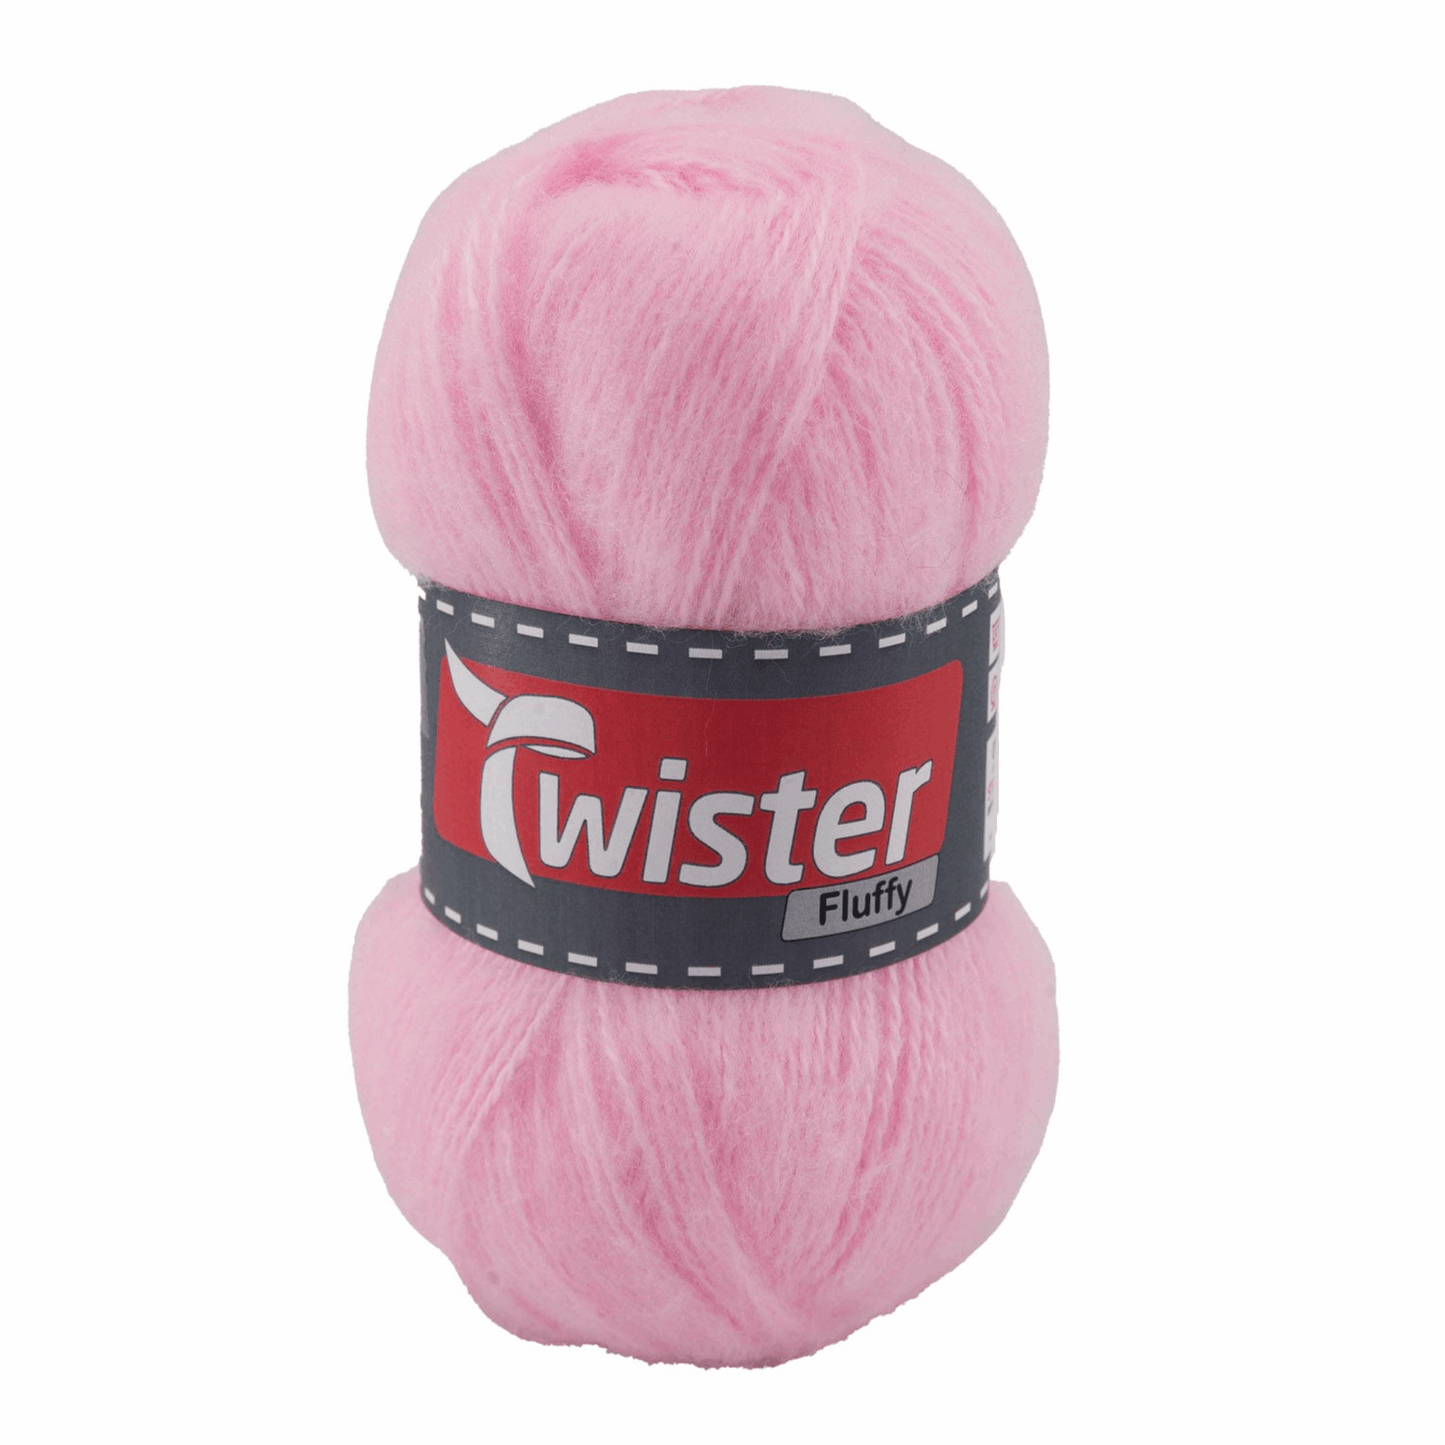 Twister Fluffy, 50g, 98320, Farbe rosa 31